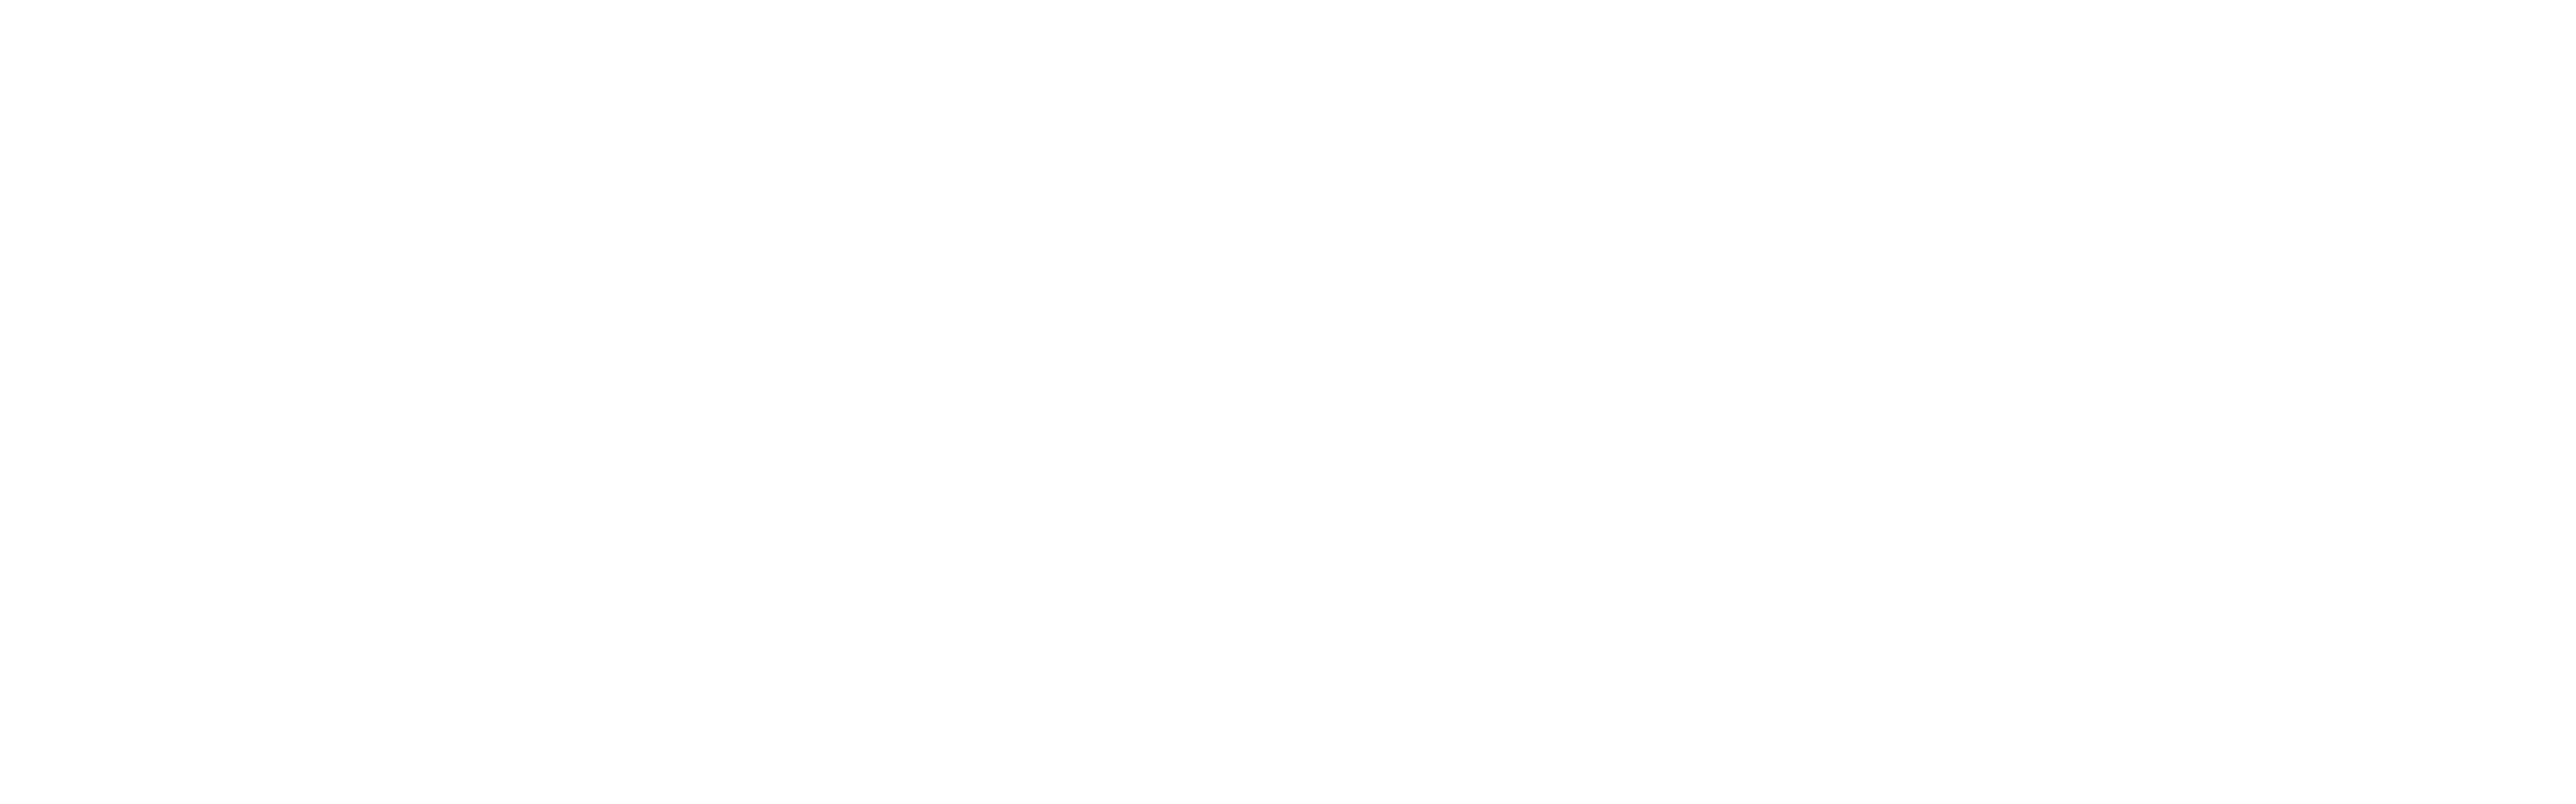 MetroStar Systems Logo